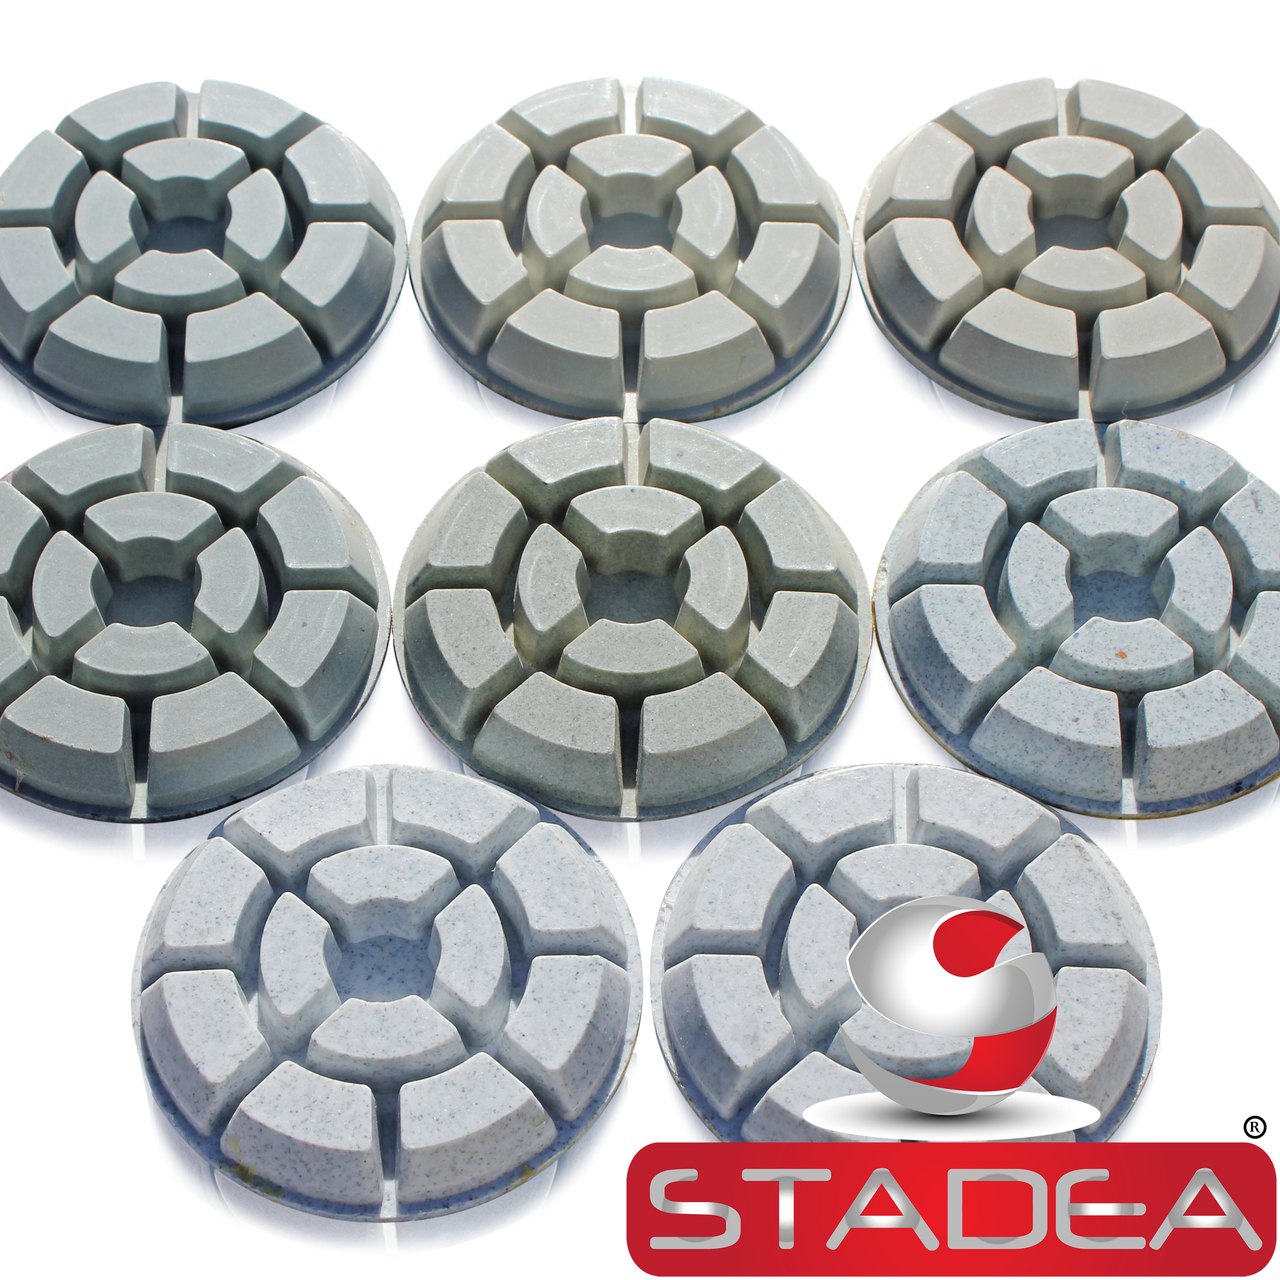 4 STADEA Concrete Diamond Polishing Pads Set for diamond concrete polishing Concrete Sanding Wet Grinders Polishers Shop N Save Diamond Tools